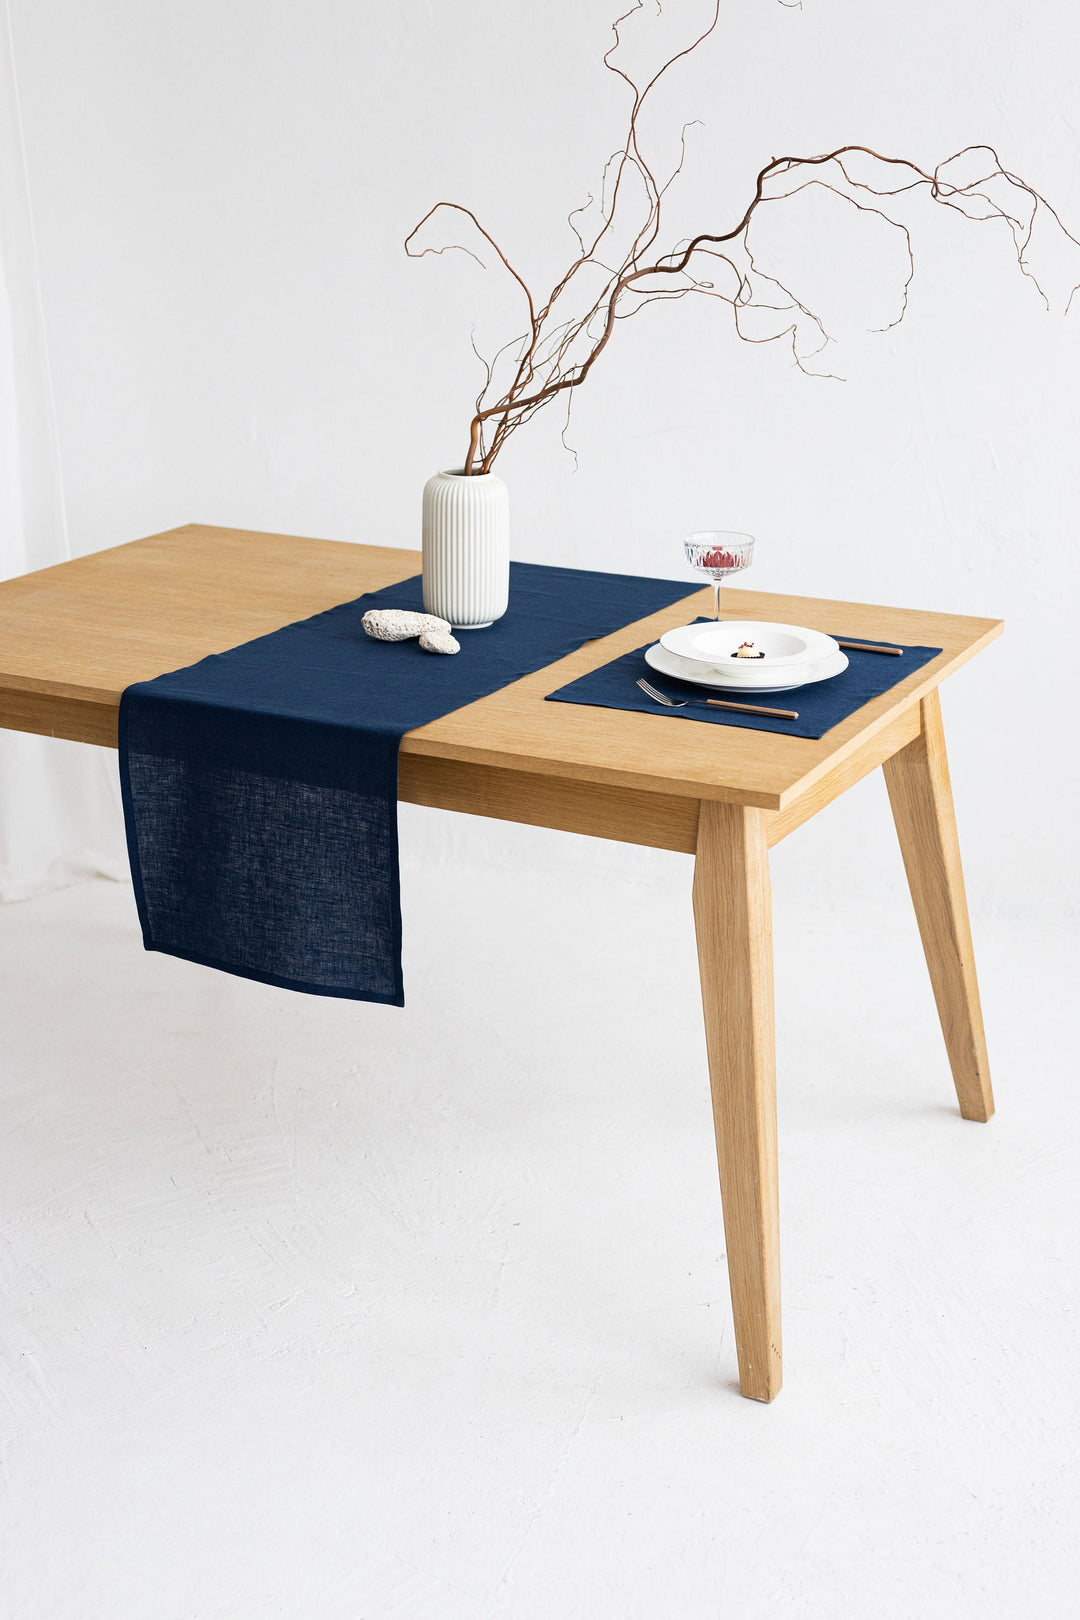 Linen Table Runner On Table In Dark Blue Color - Daily Linen